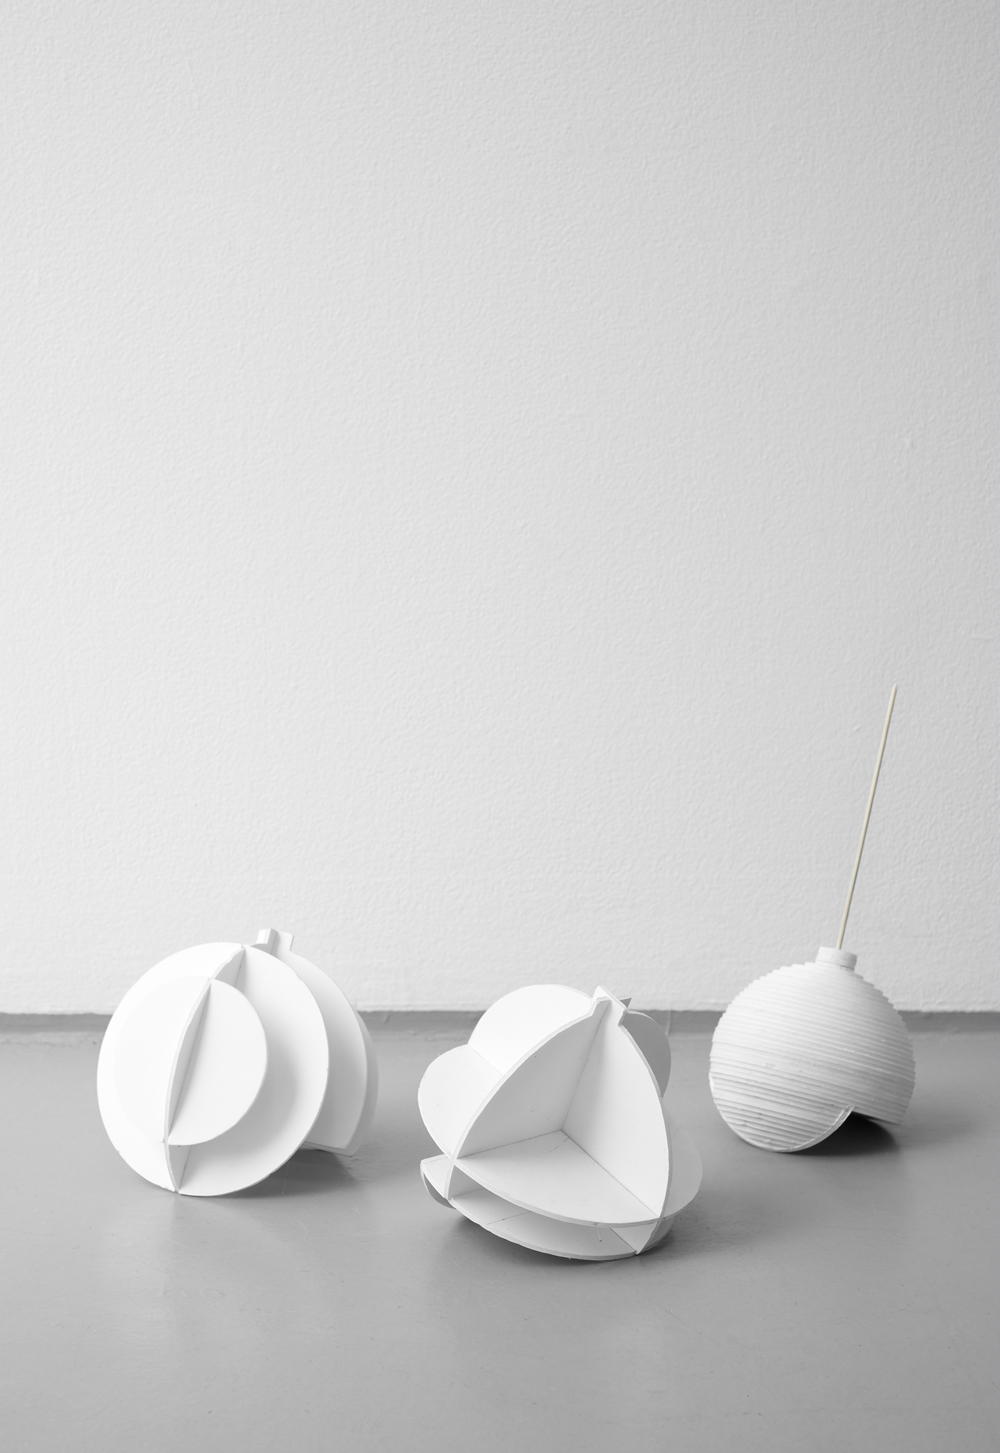 Falke Svatun, Vases, Tumble, Design, Milan Design Week